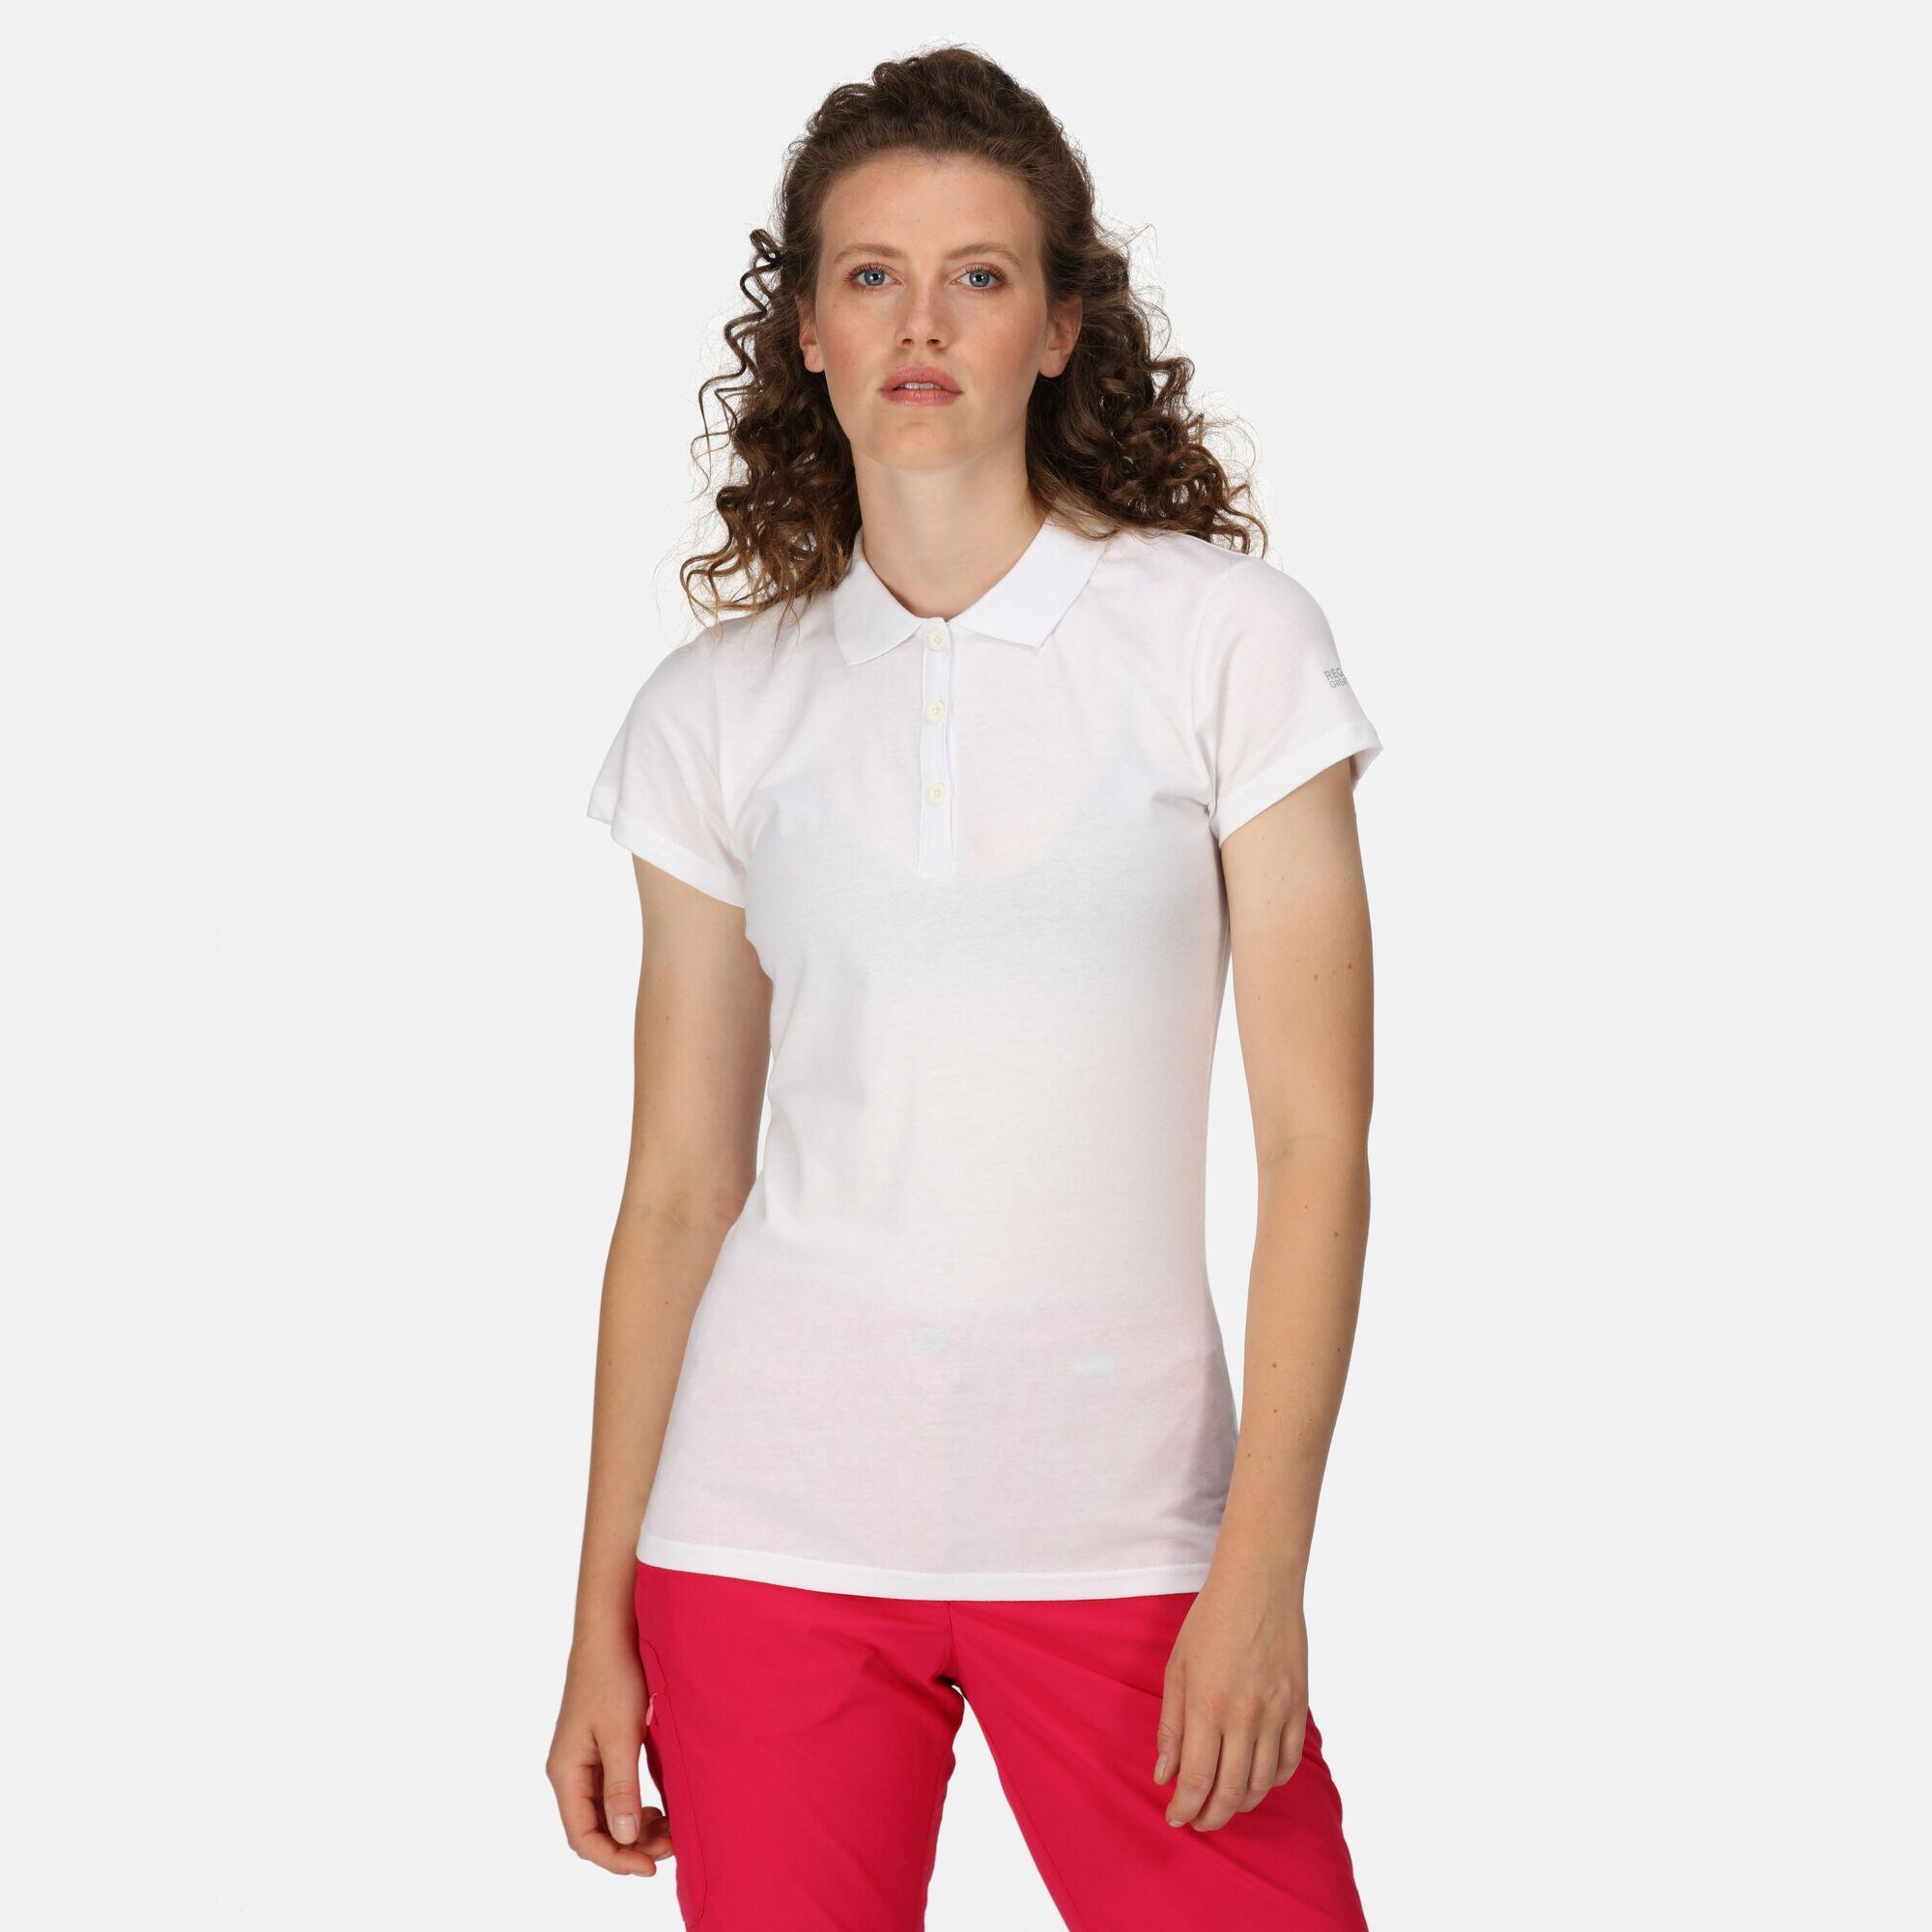 REGATTA Sinton Women's Fitness T-Shirt - White